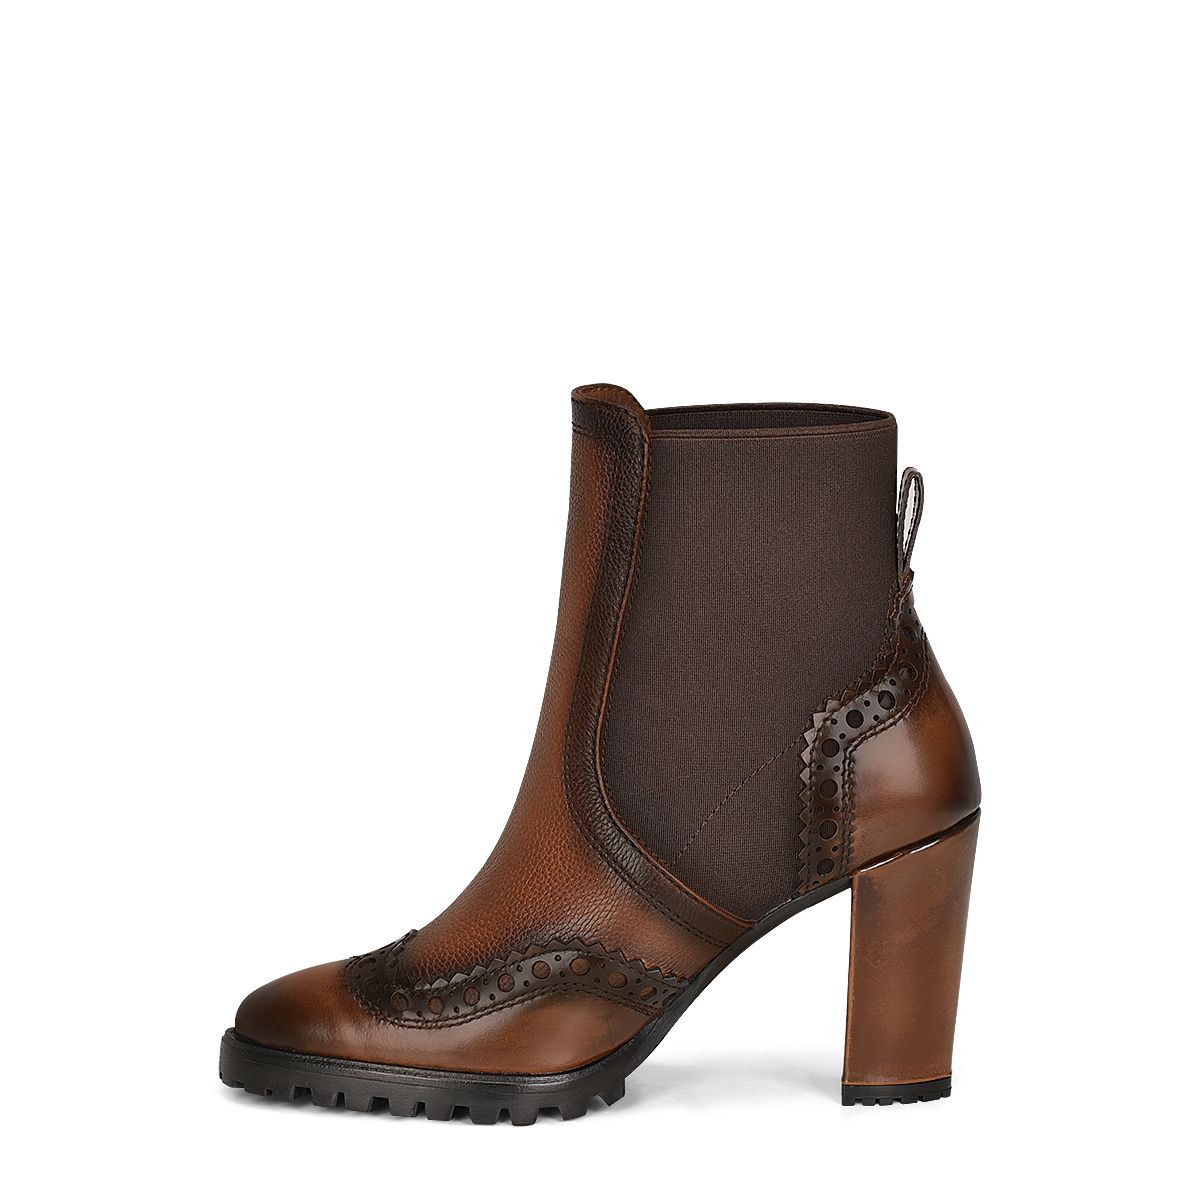 T33VURS - Cuadra brown western ankle boots for woman.-CUADRA-Kuet-Cuadra-Boots